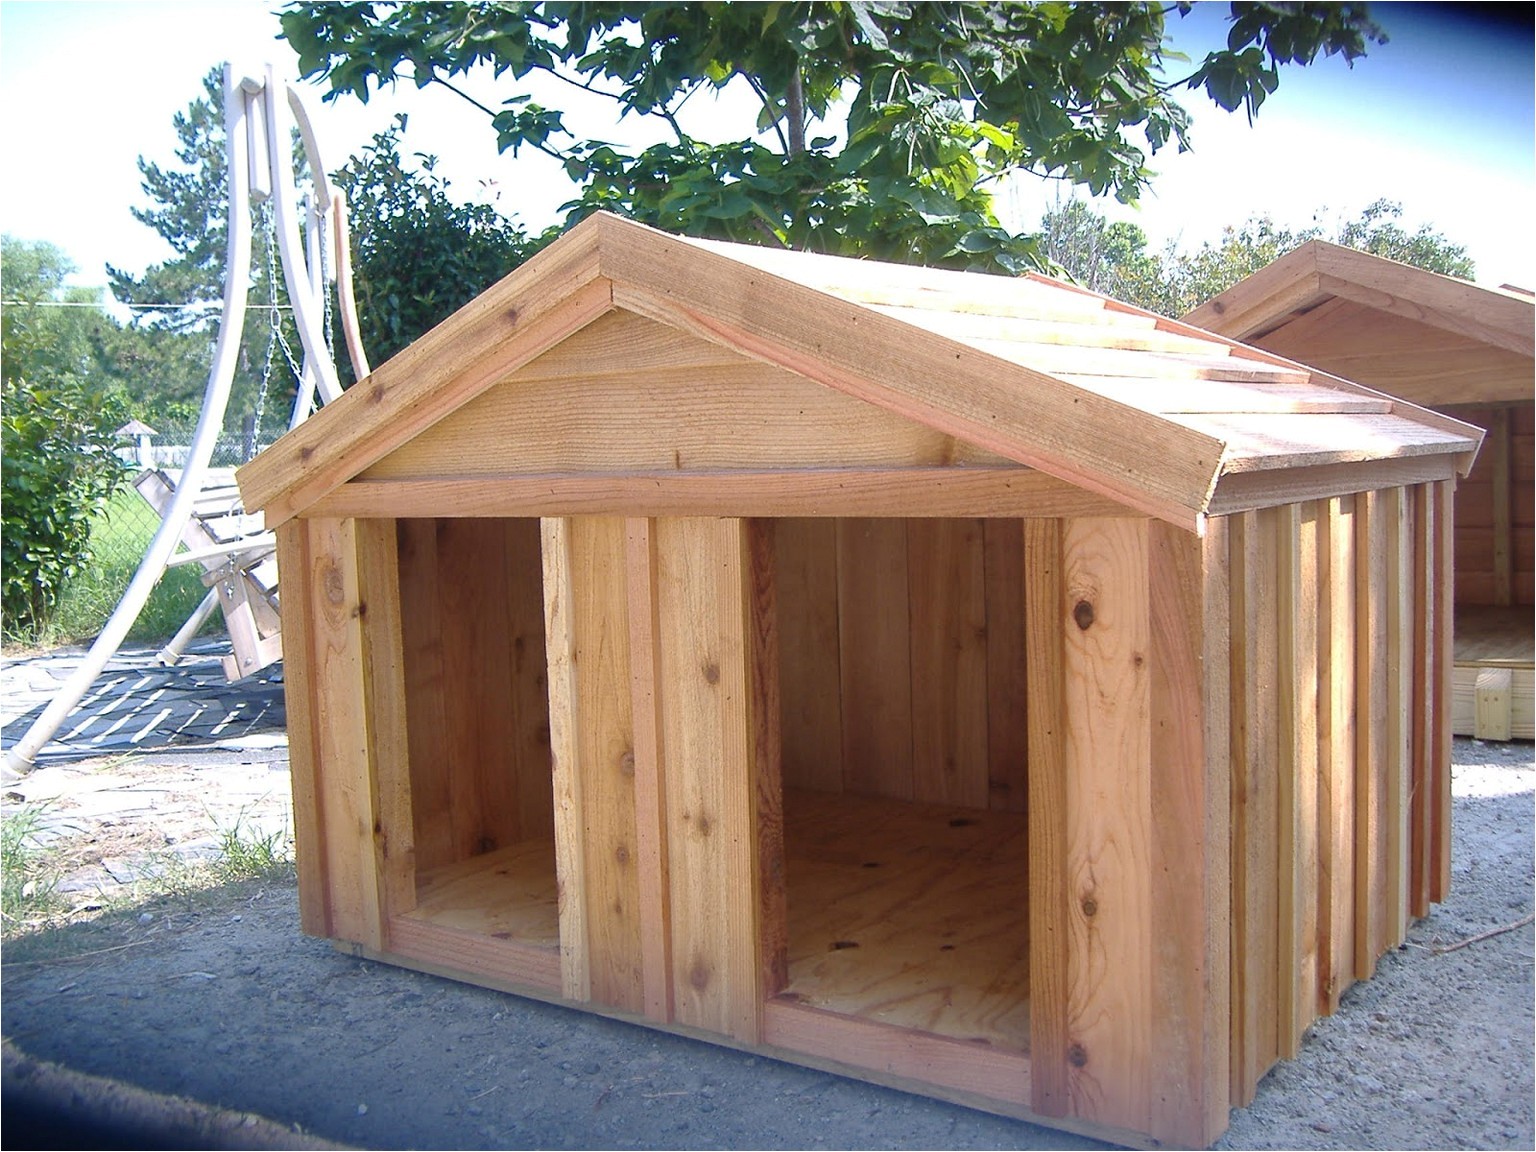 diy dog house for beginner ideas